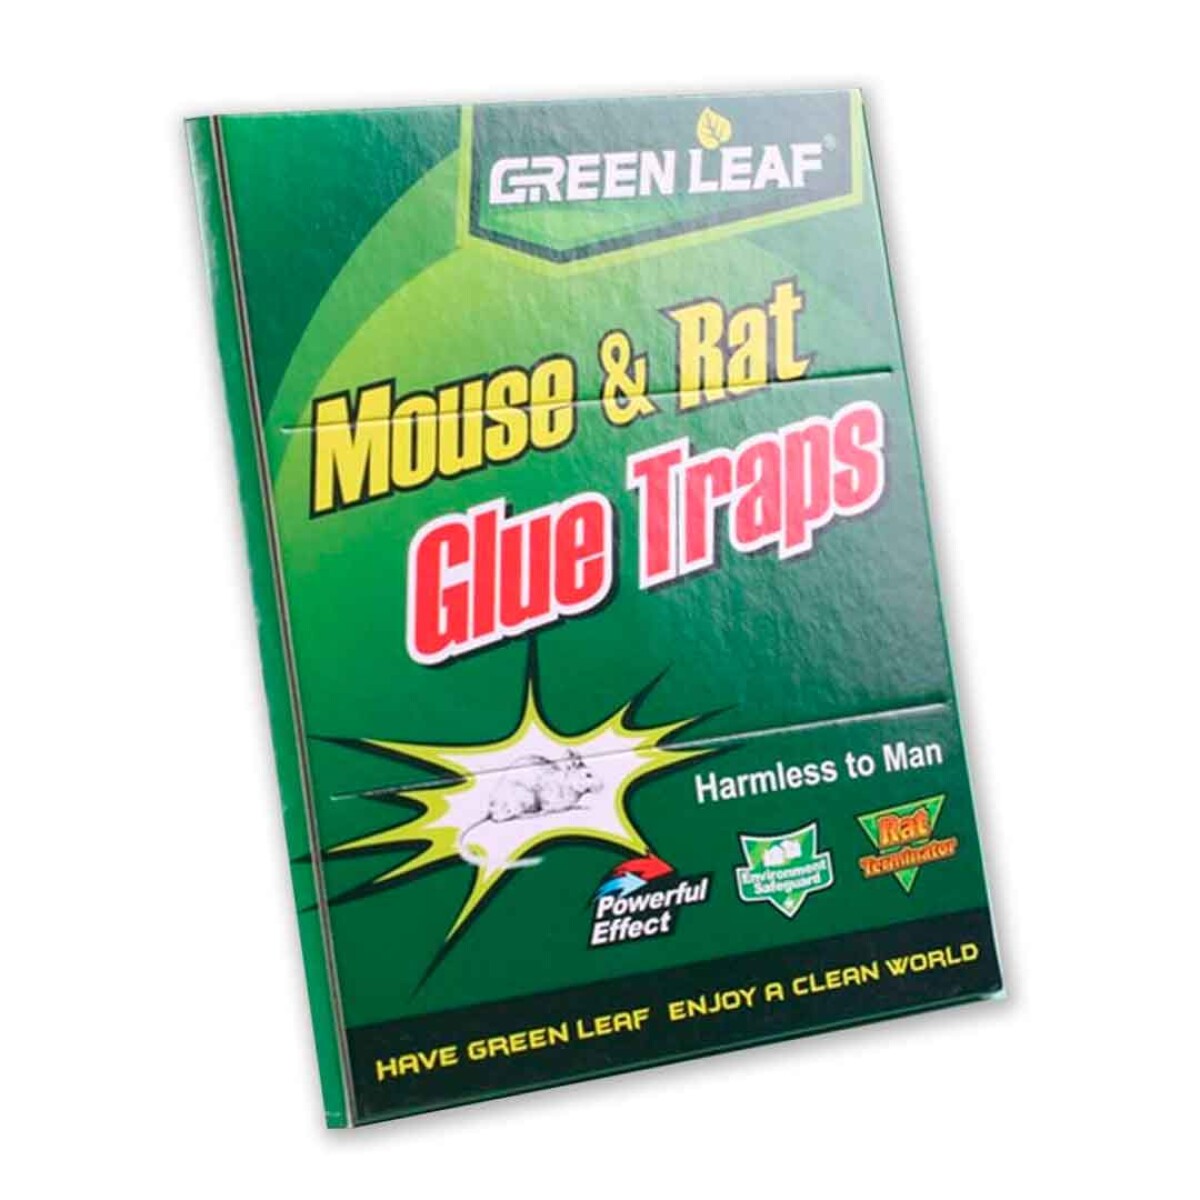 Trampa ara ratas y ratones adhesiva Green Leaf - 001 